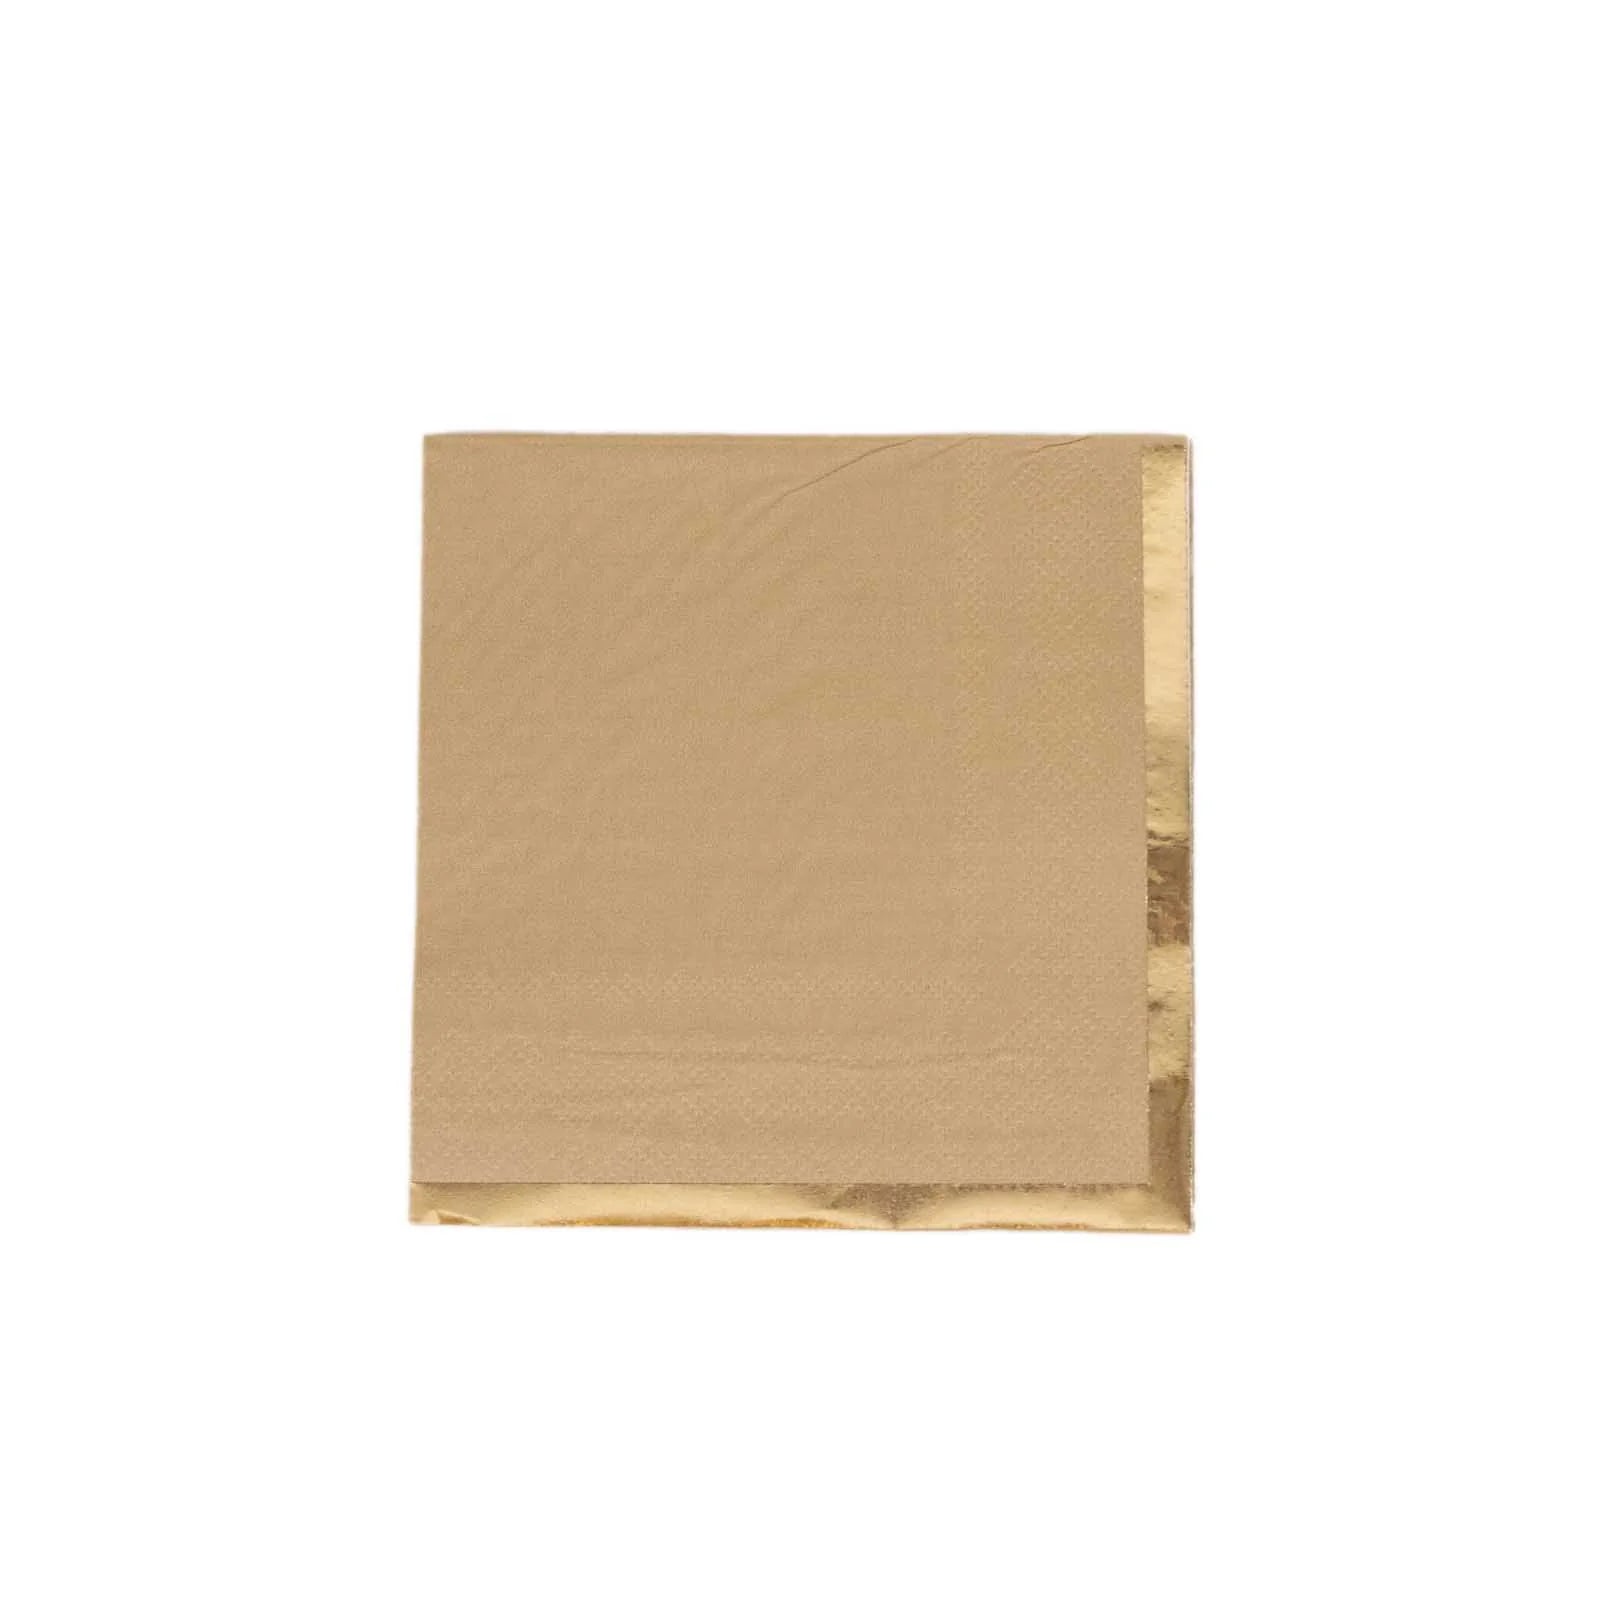 50 Soft 2 Ply Disposable Dinner Cocktail Paper Napkins with Gold Foil Edge NAP_BEV1_NATGD